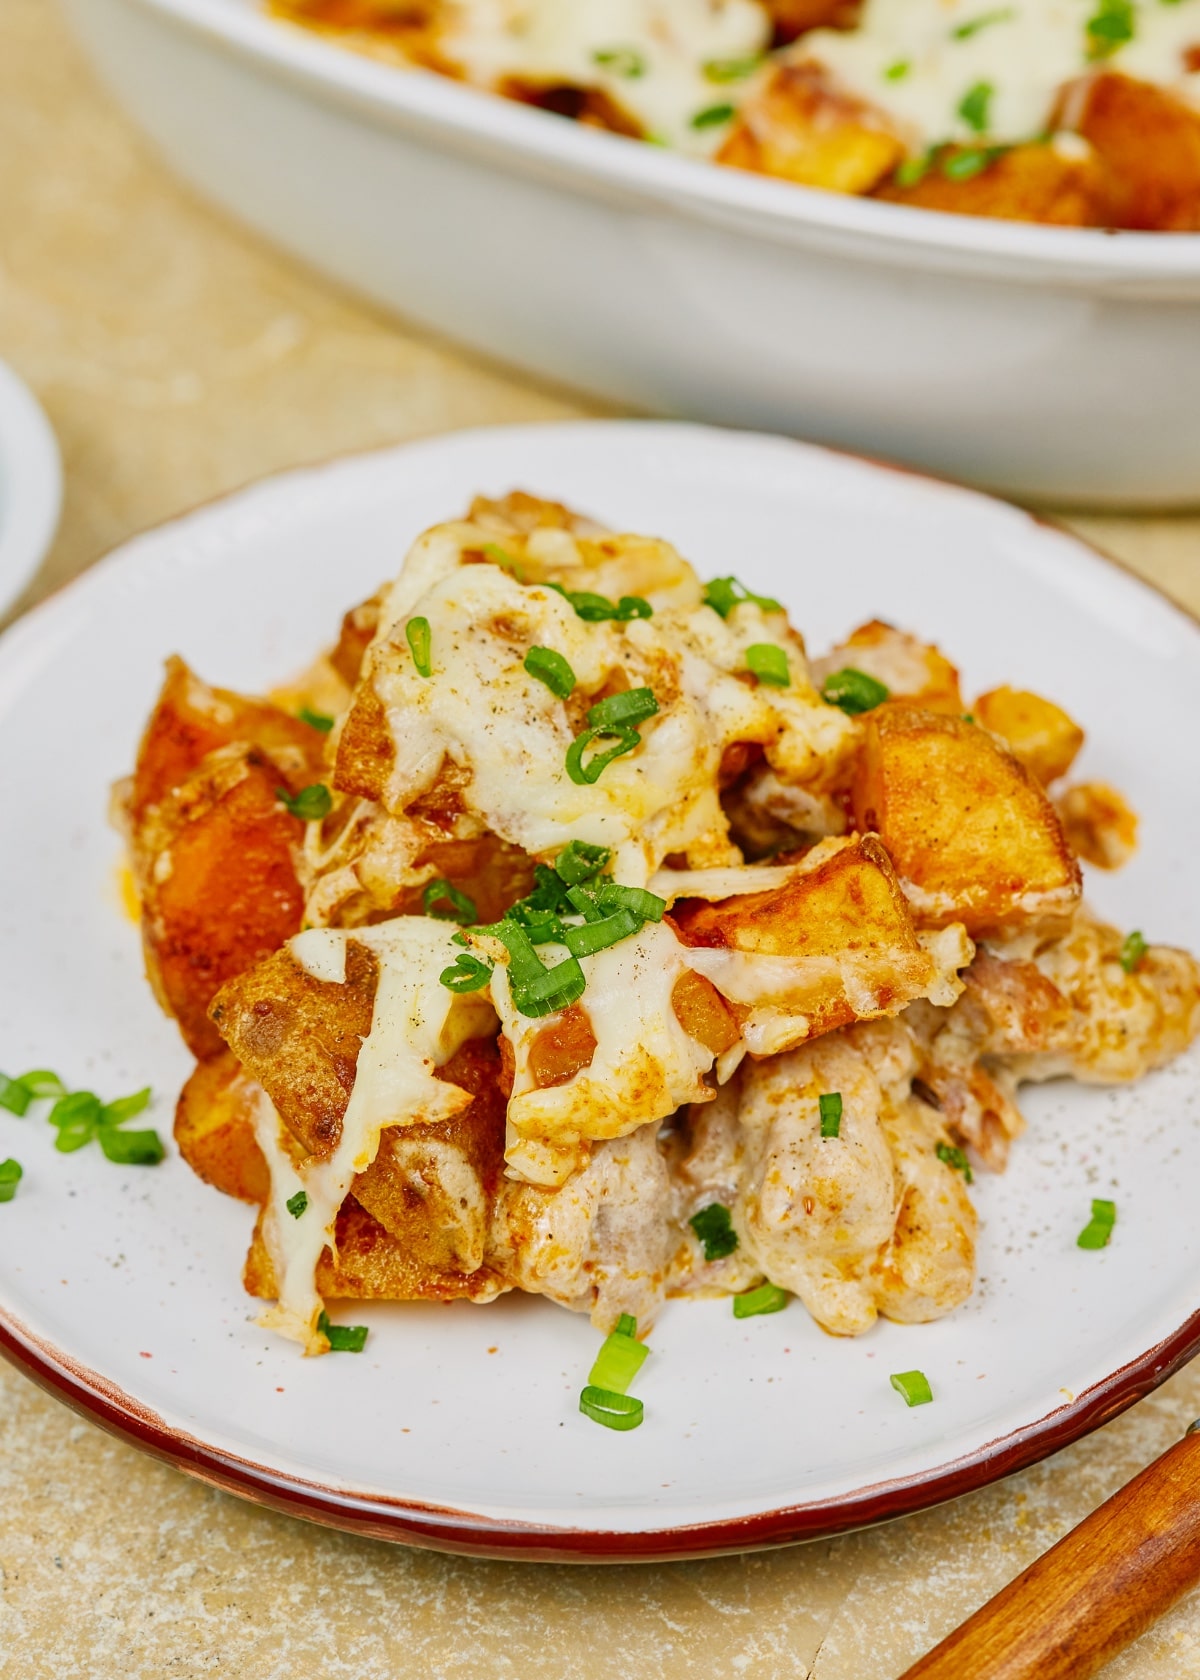 a plate of potato and chicken casserole